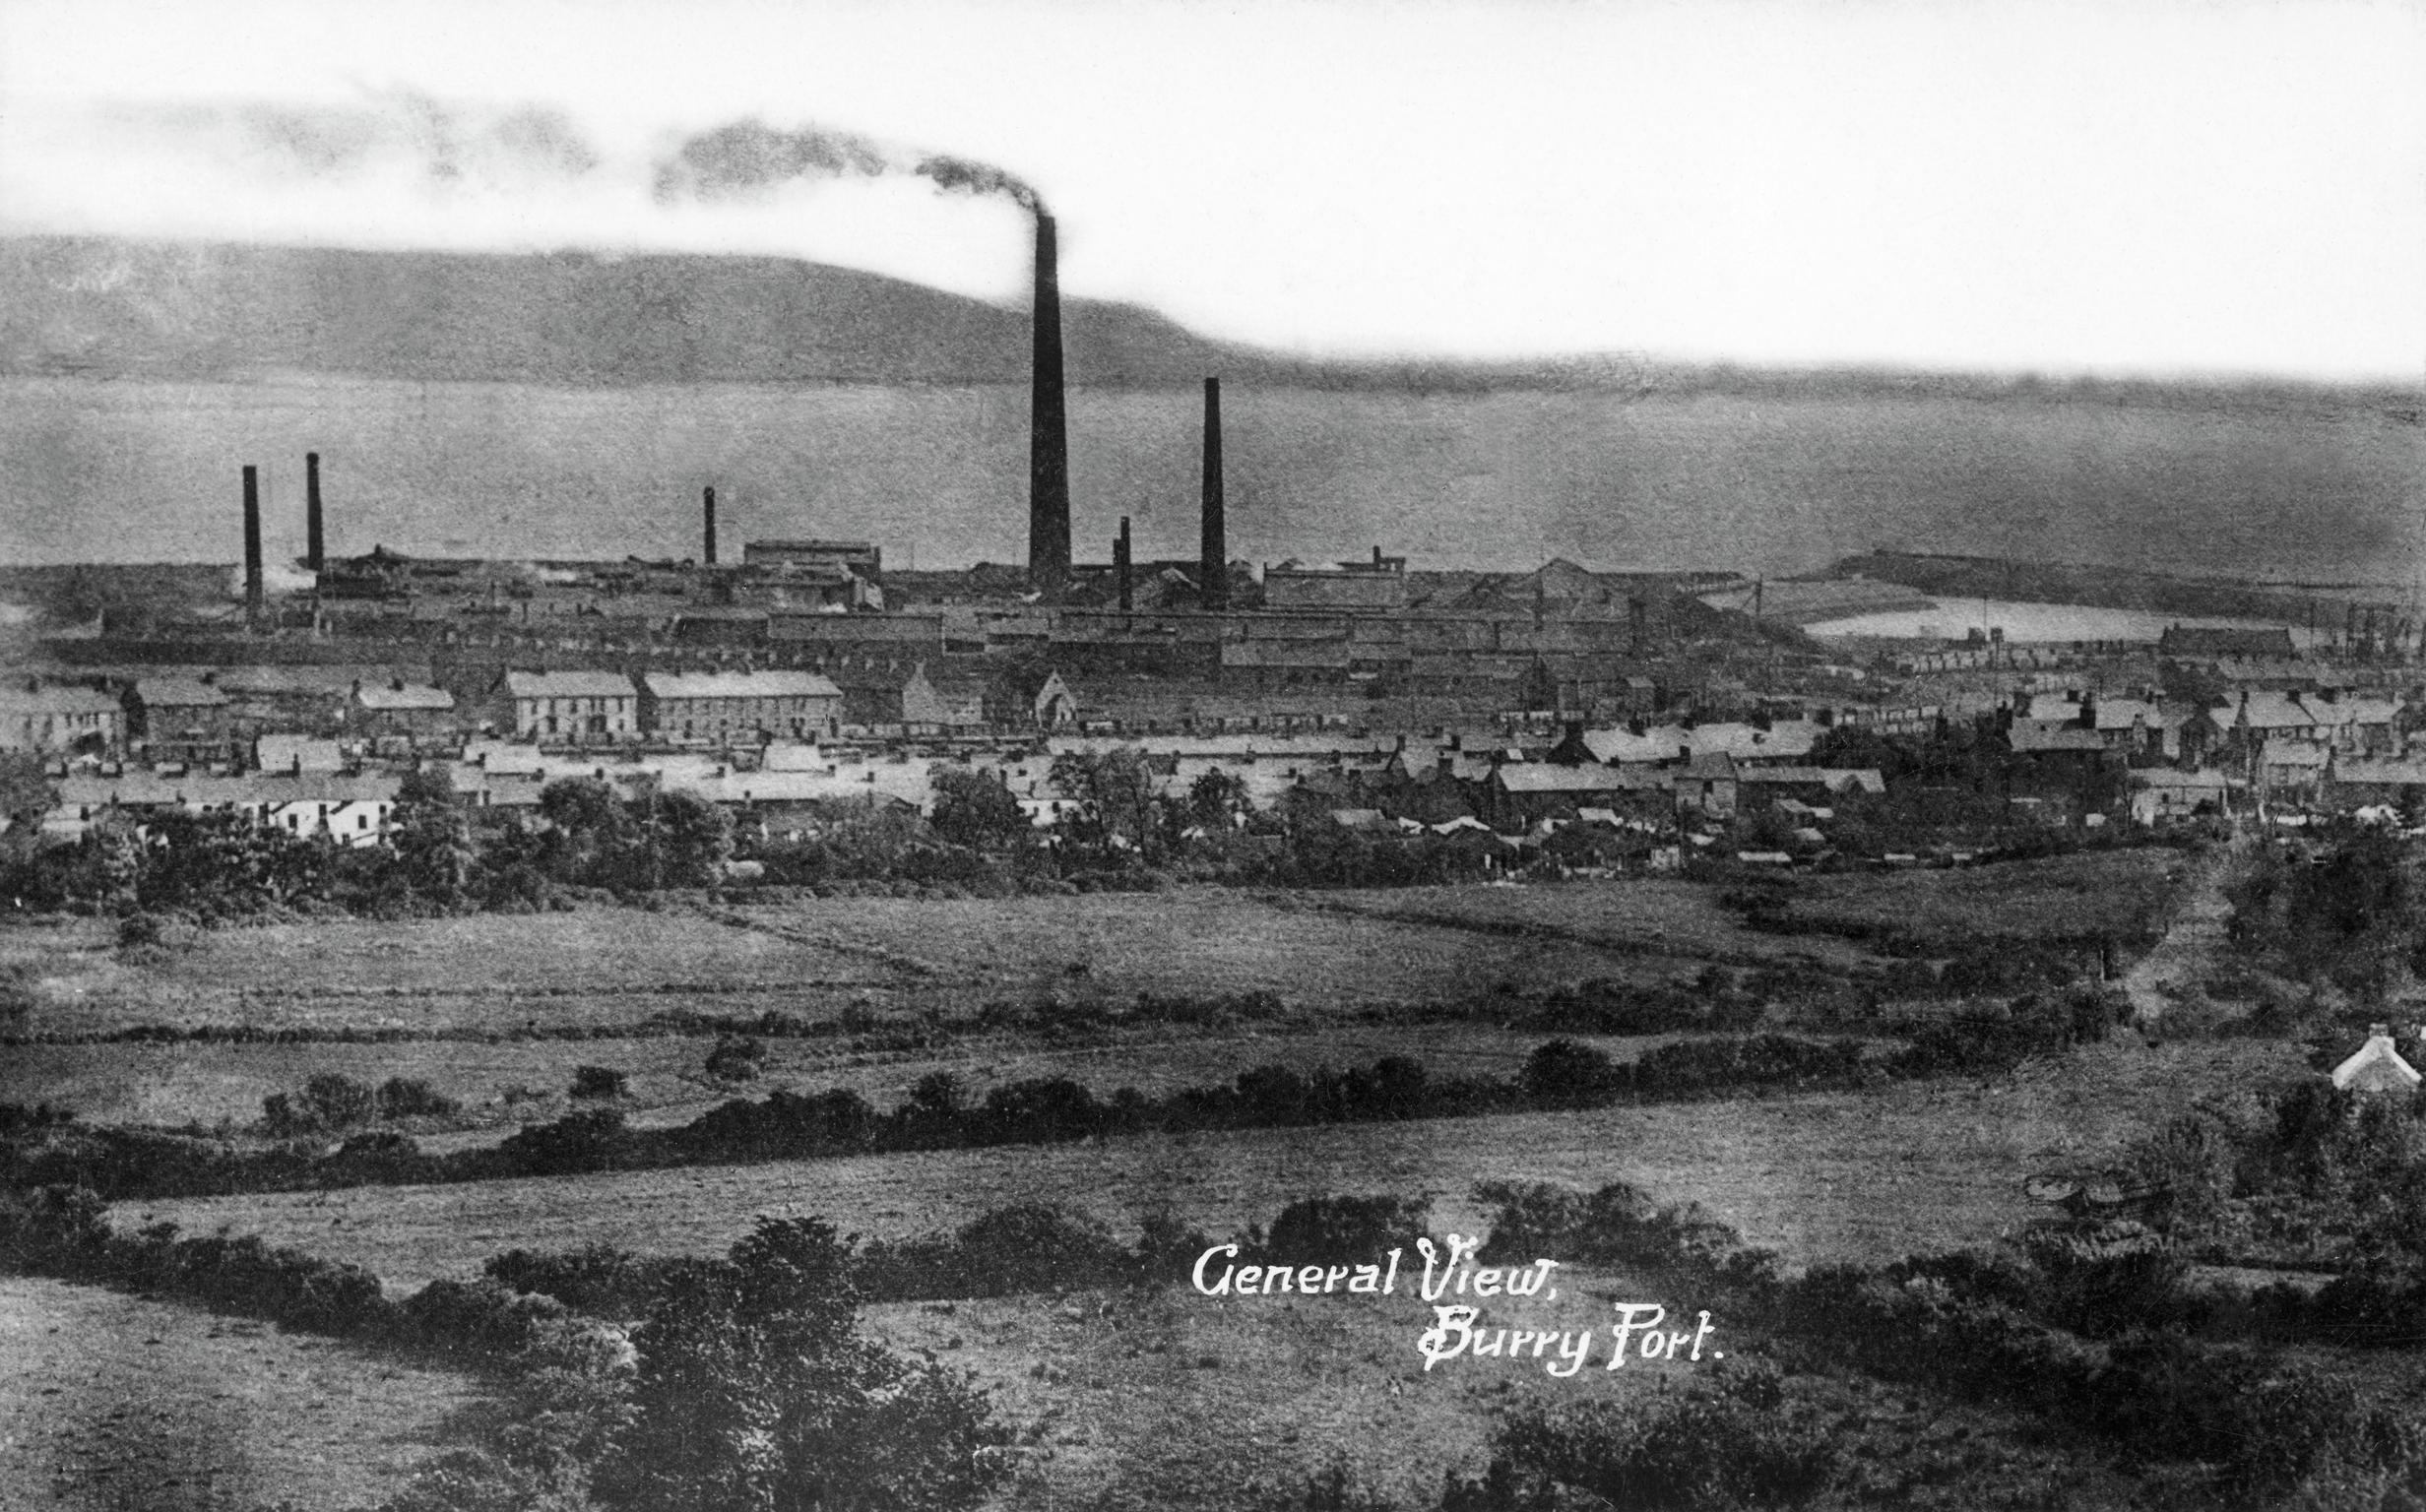 General View, Burry Port (postcard)